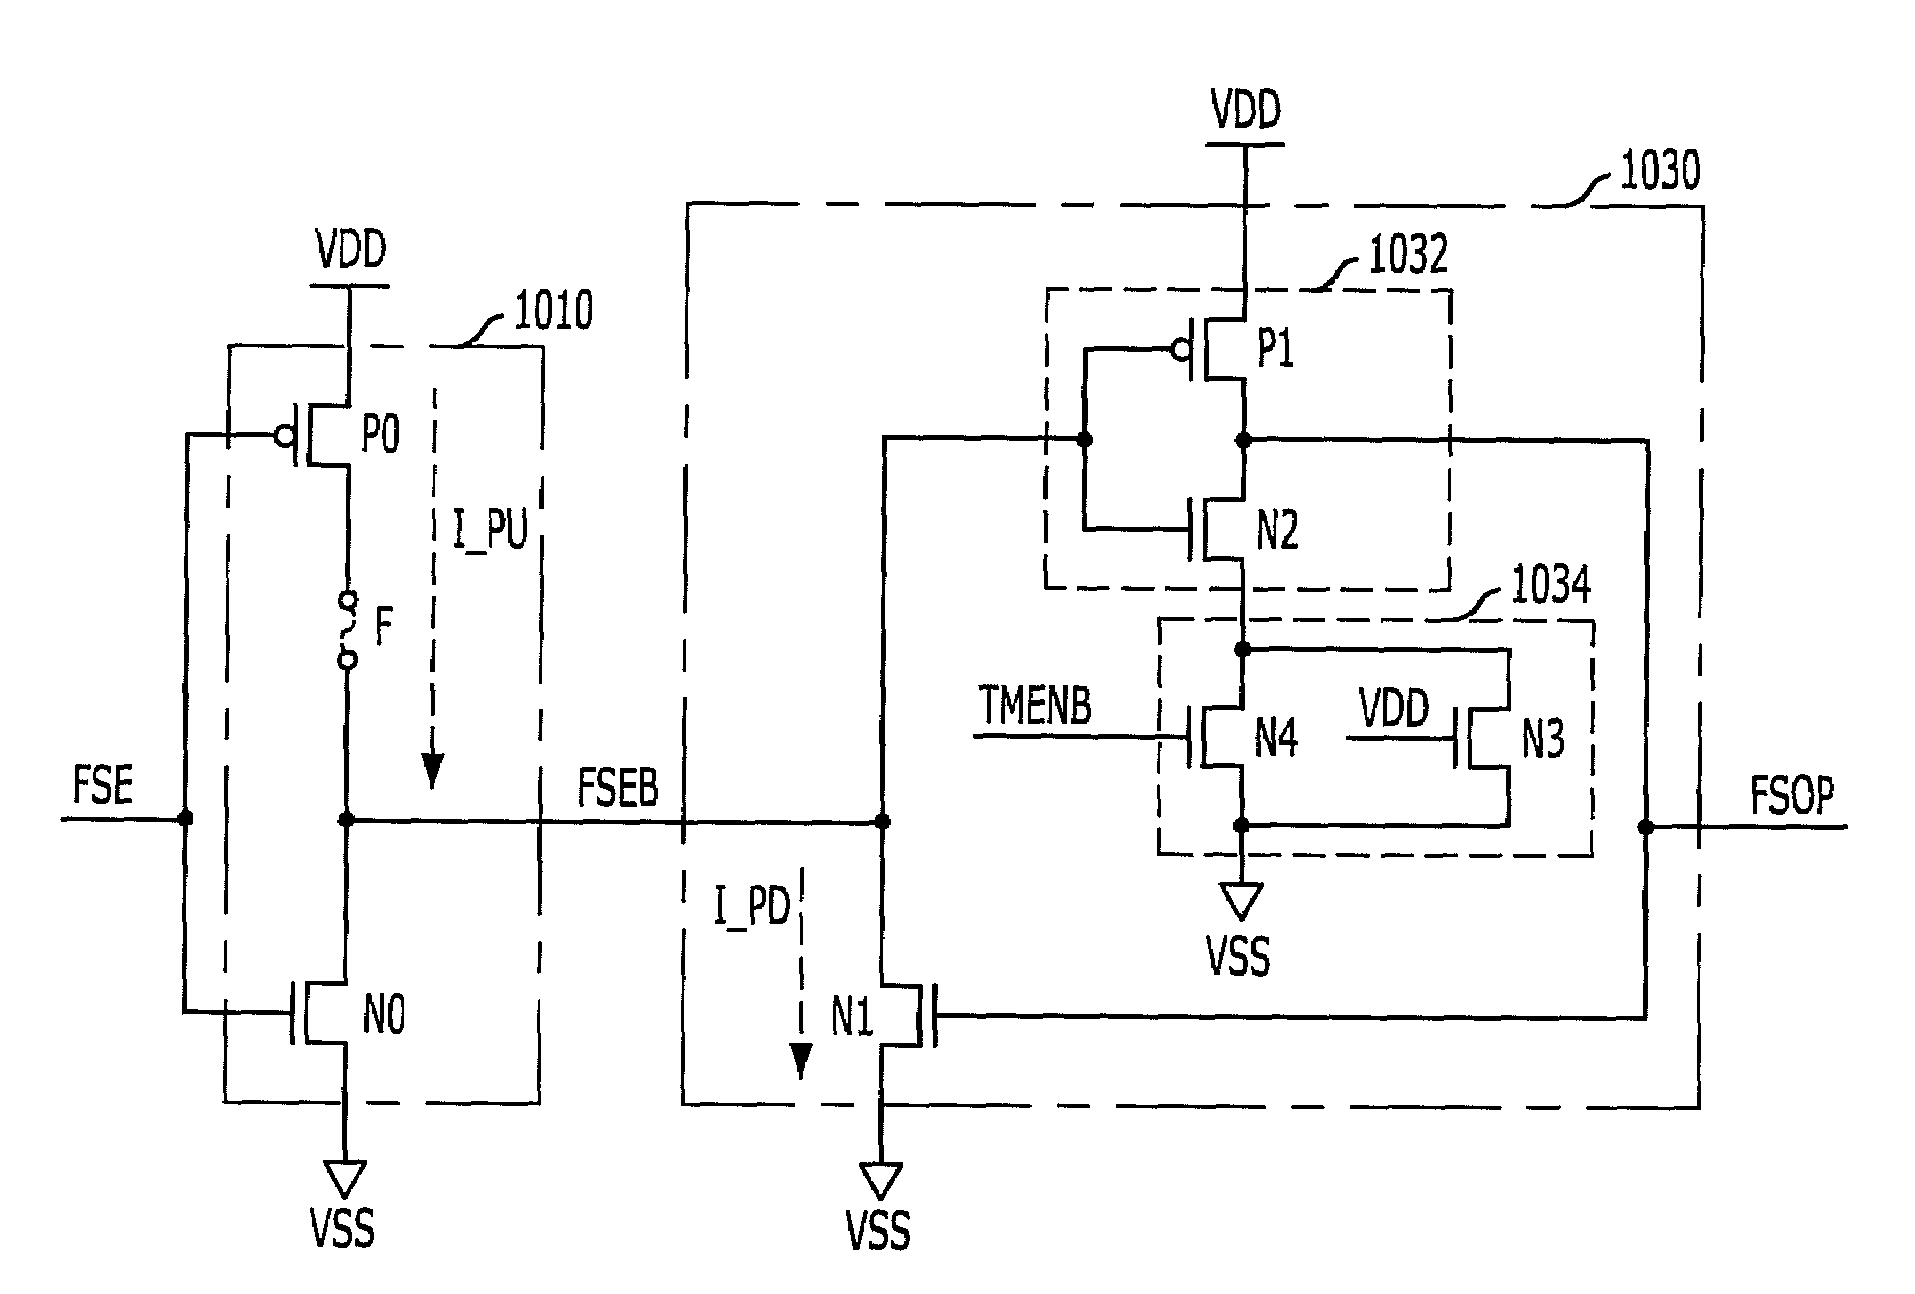 Fuse circuit and redundancy circuit